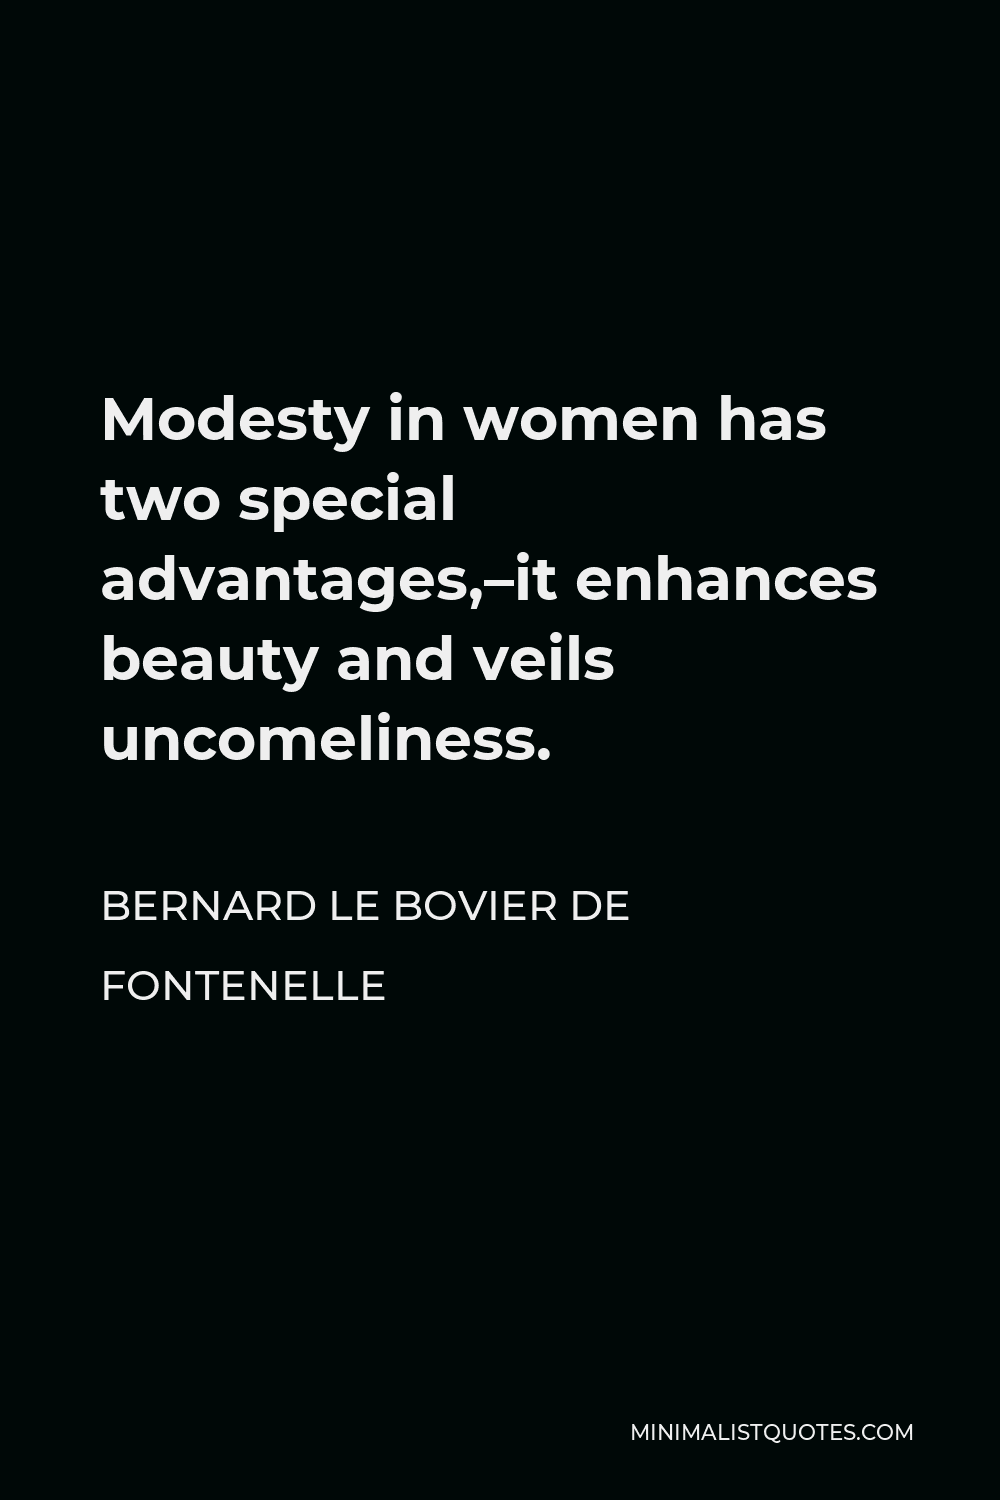 Bernard le Bovier de Fontenelle Quote - Modesty in women has two special advantages,–it enhances beauty and veils uncomeliness.